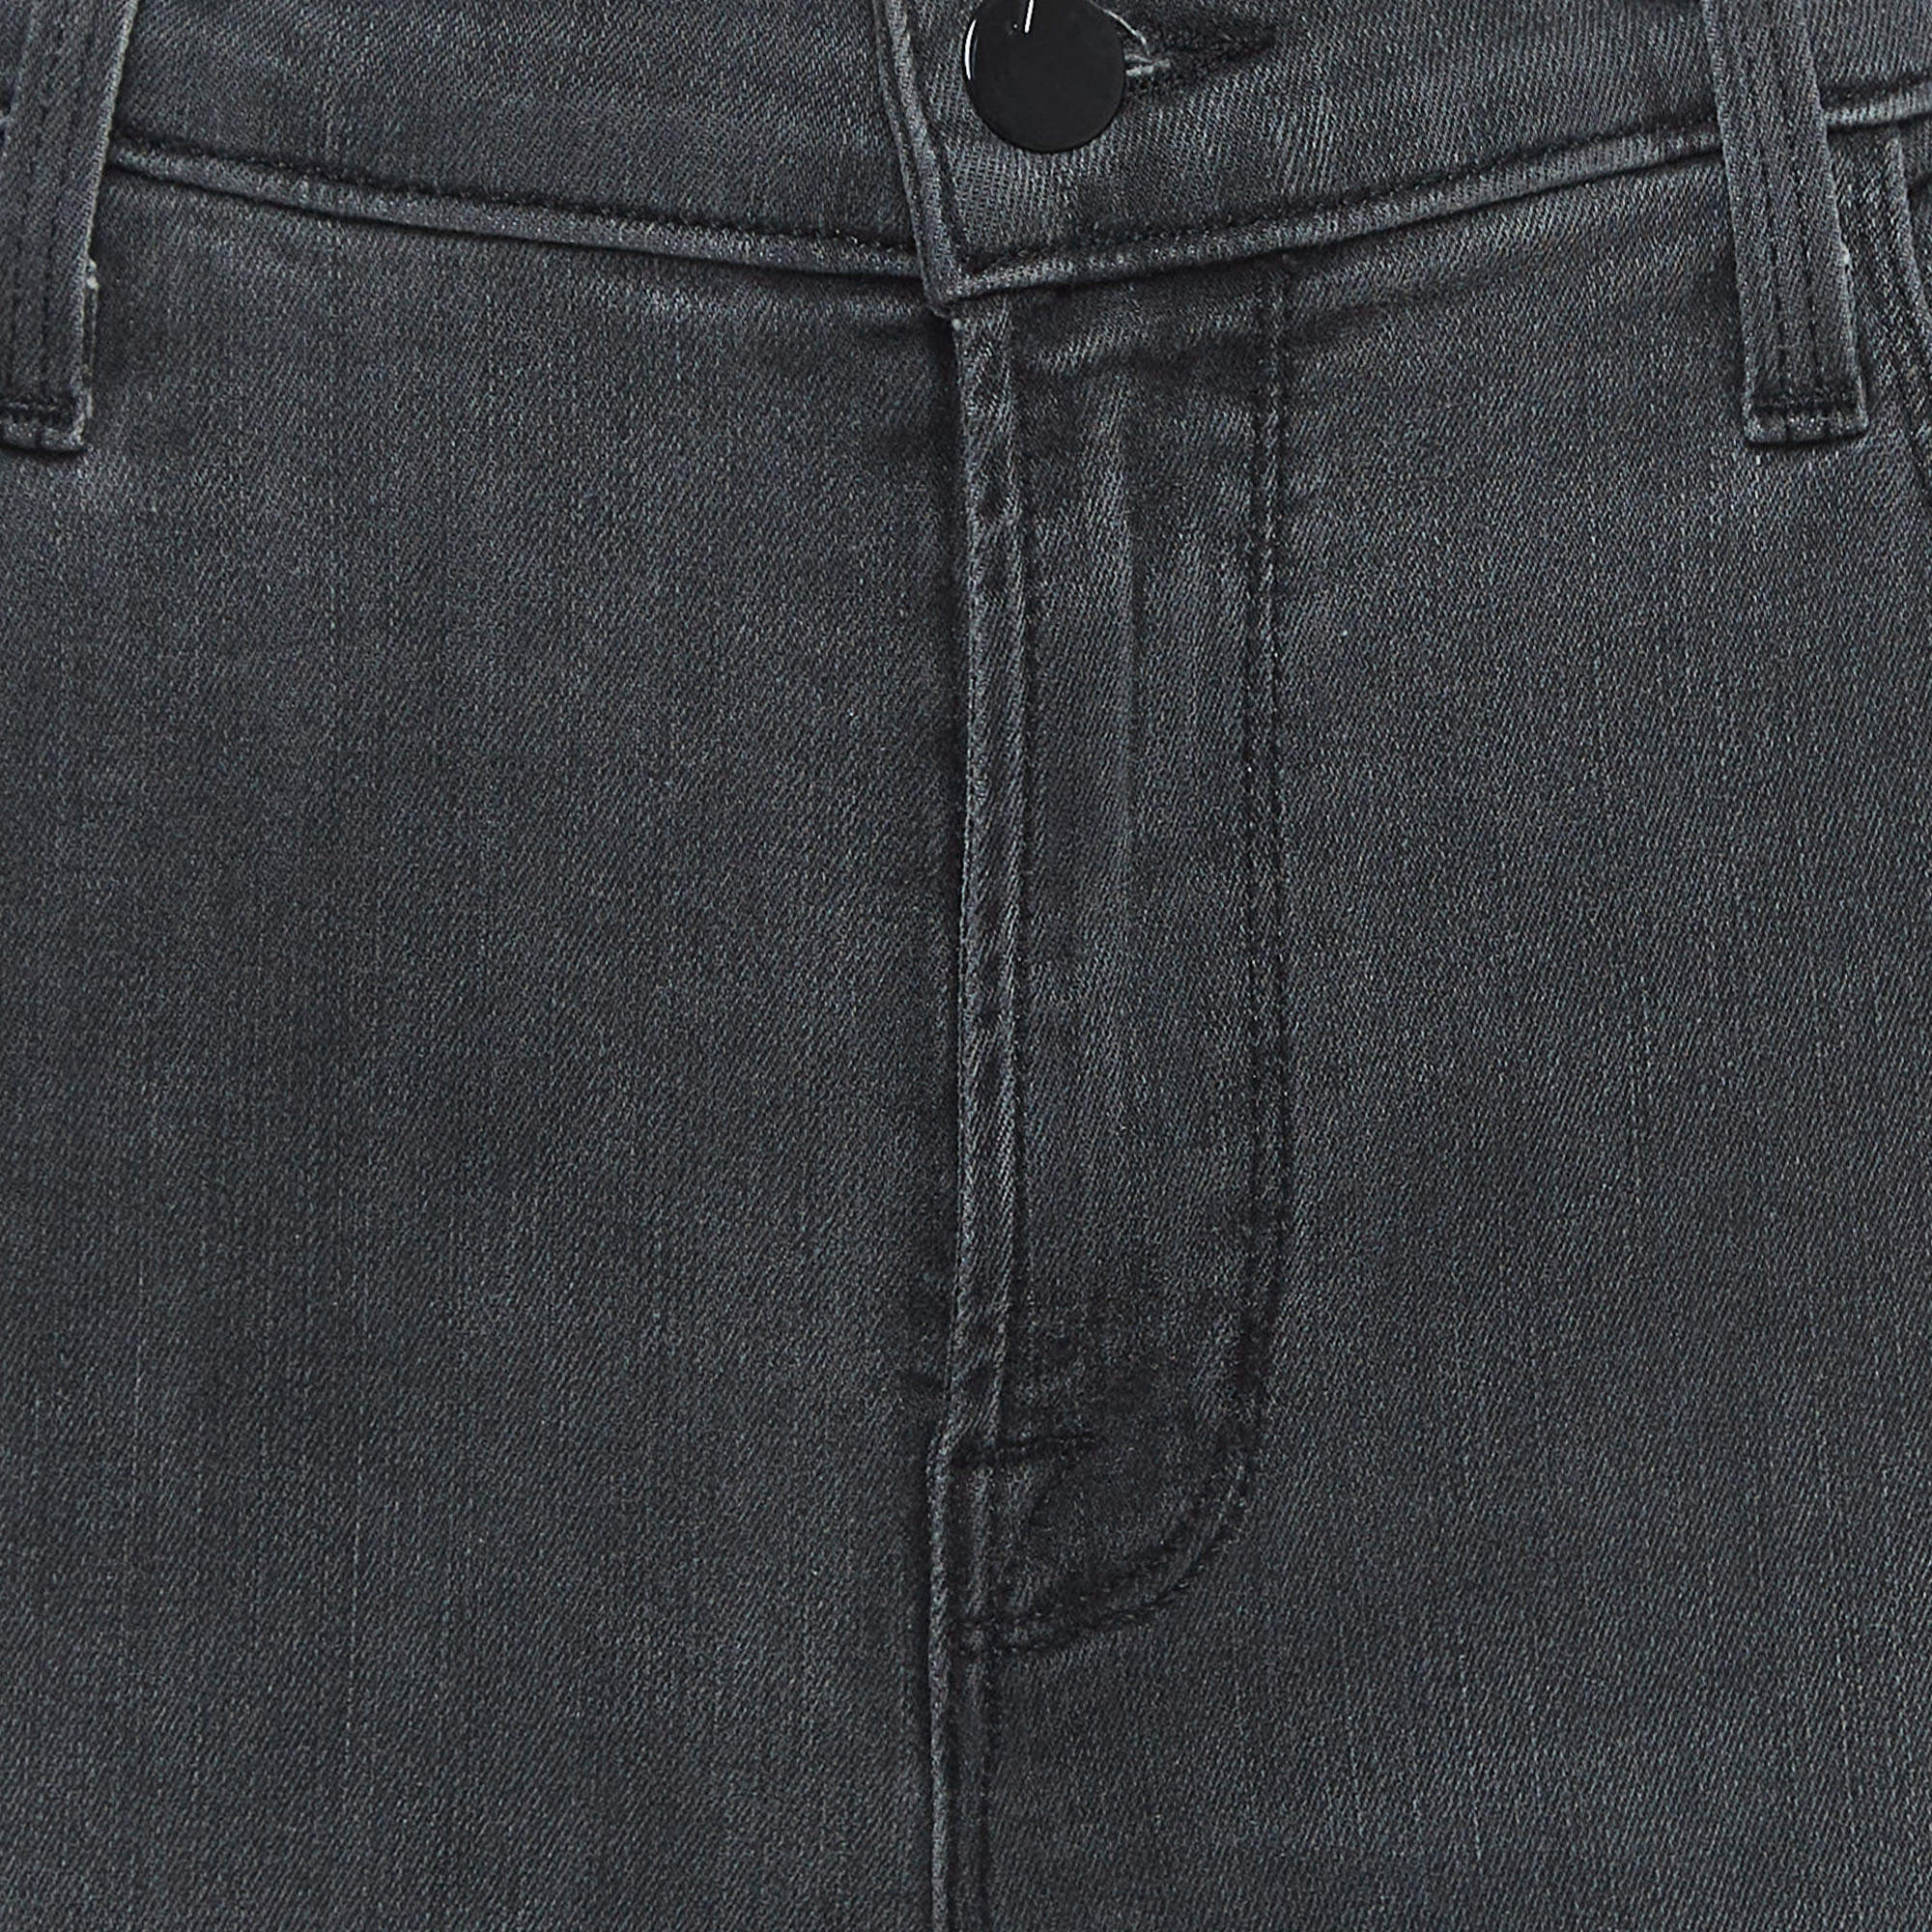 J Brand Grey Ripped Denim Distressed Hem Skinny Jeans M Waist 29